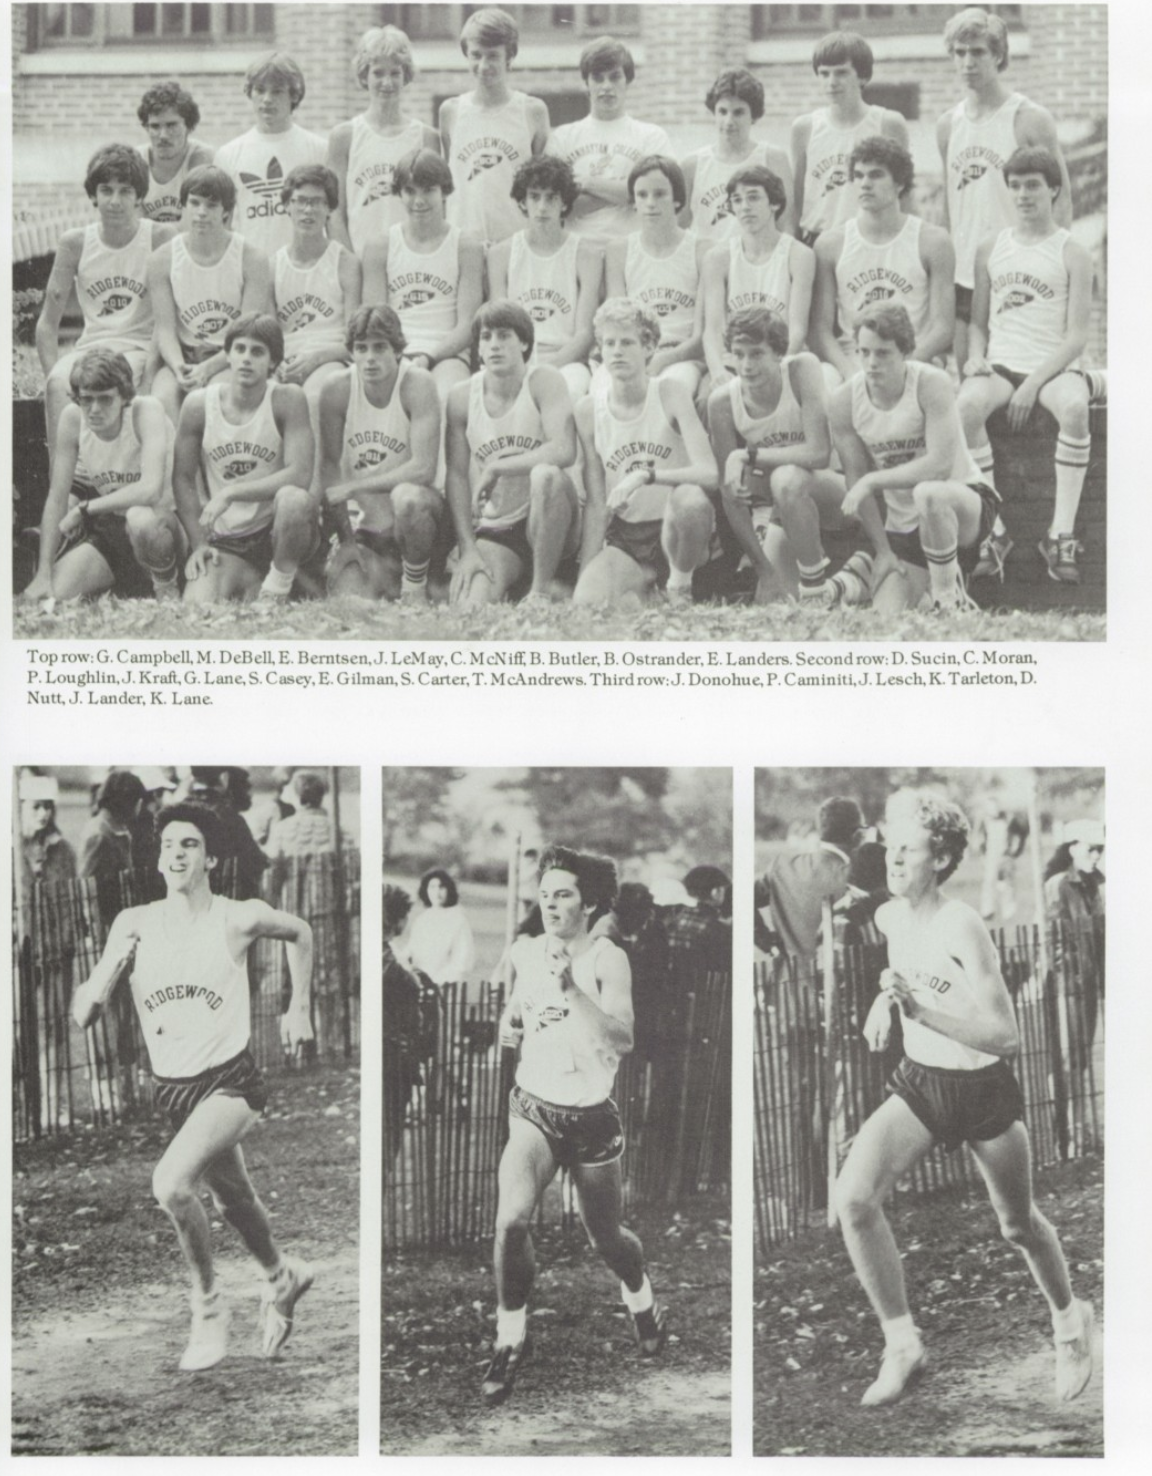 1983 Boys’ Cross Country Team